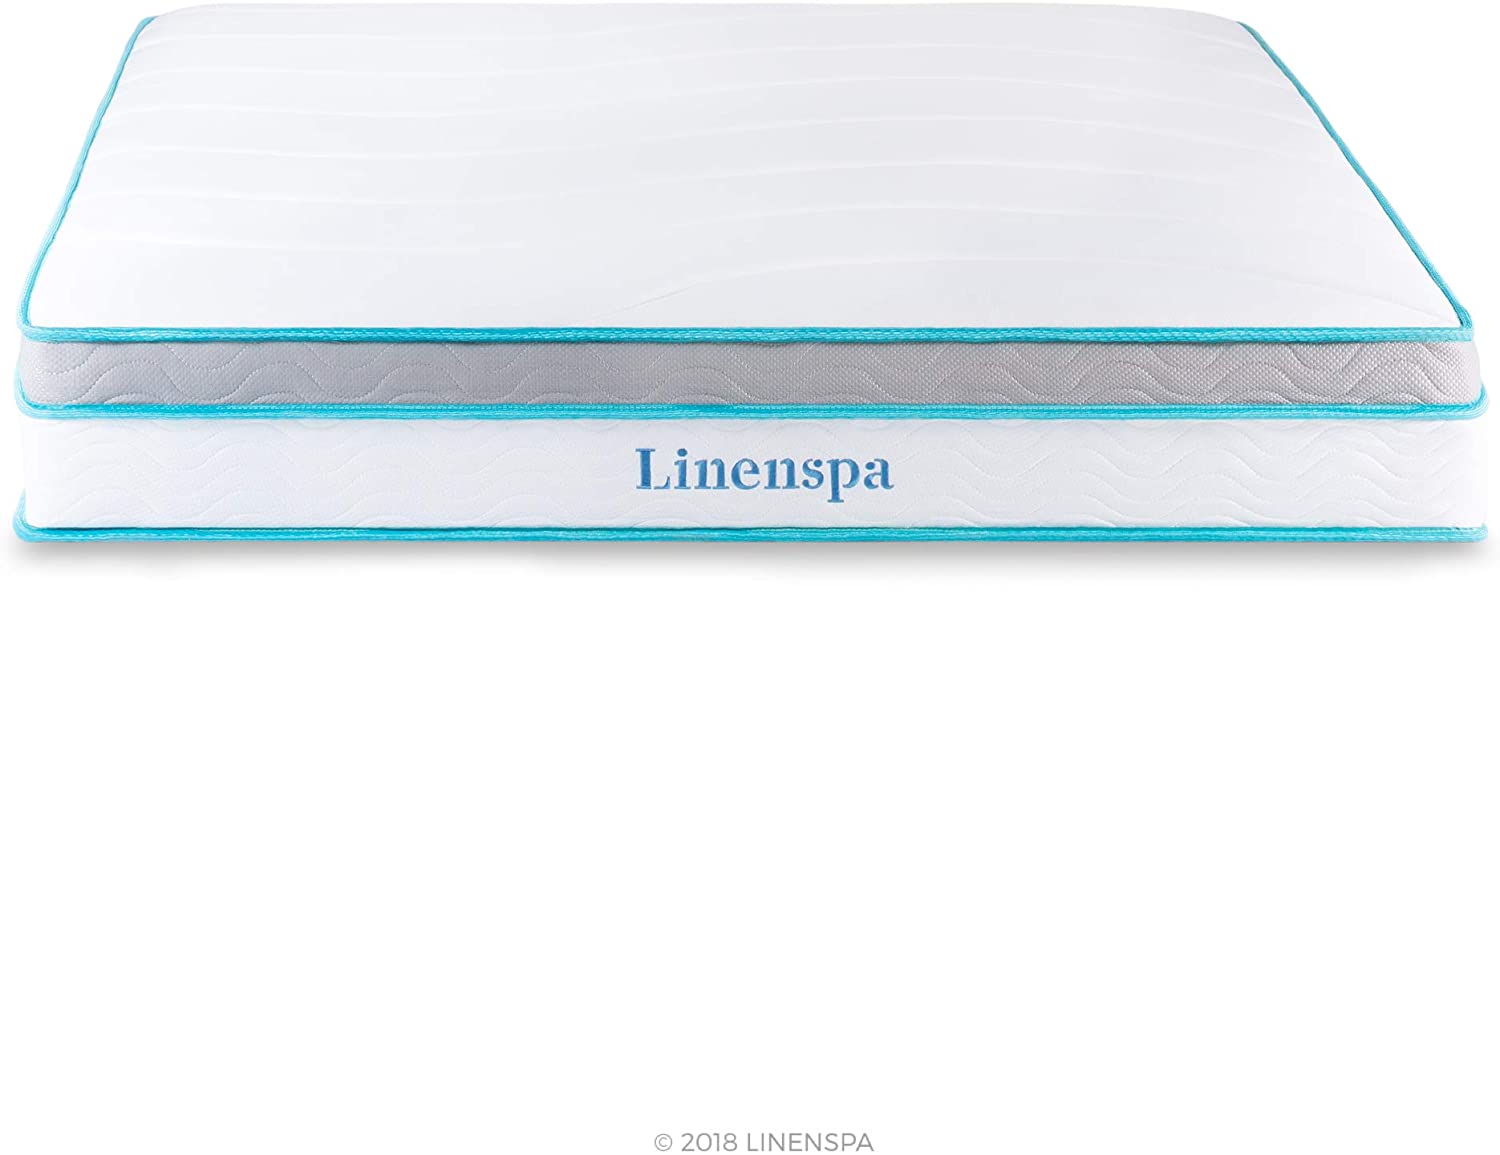 linenspa queen 10 inches thick hybrid mattress